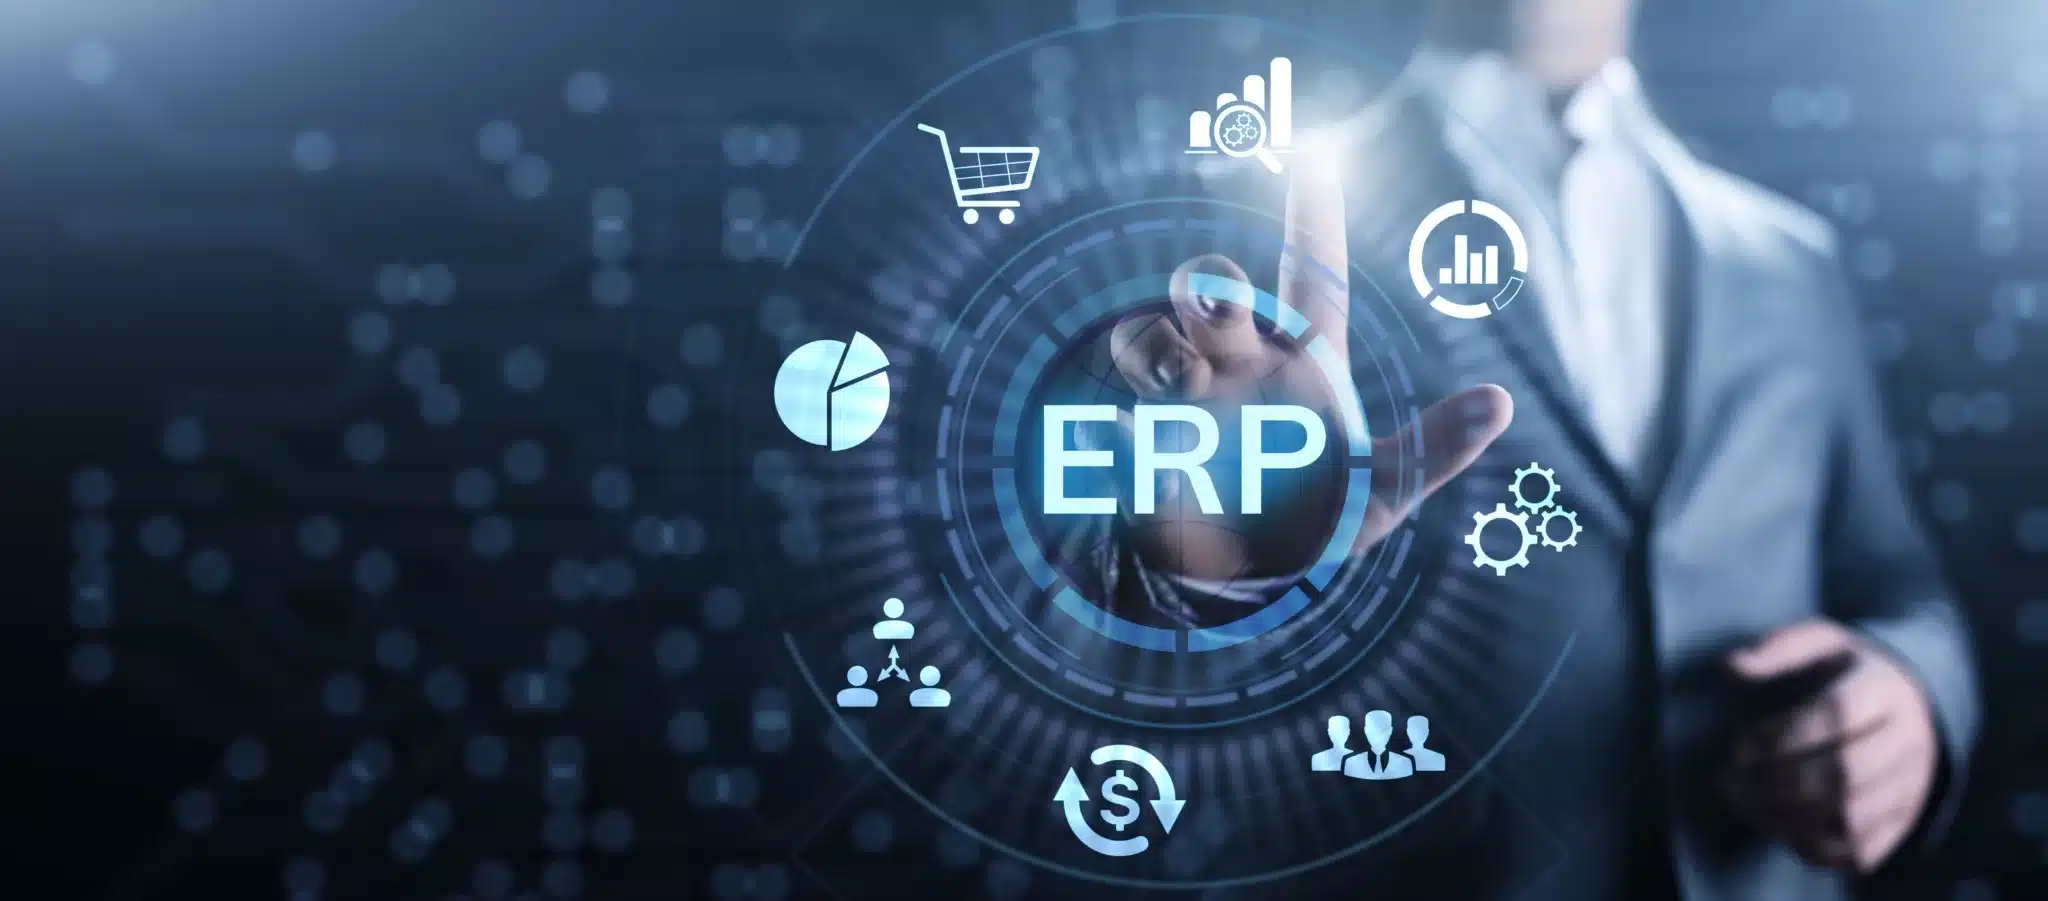 Definition of Enterprise Resource Planning (ERP)